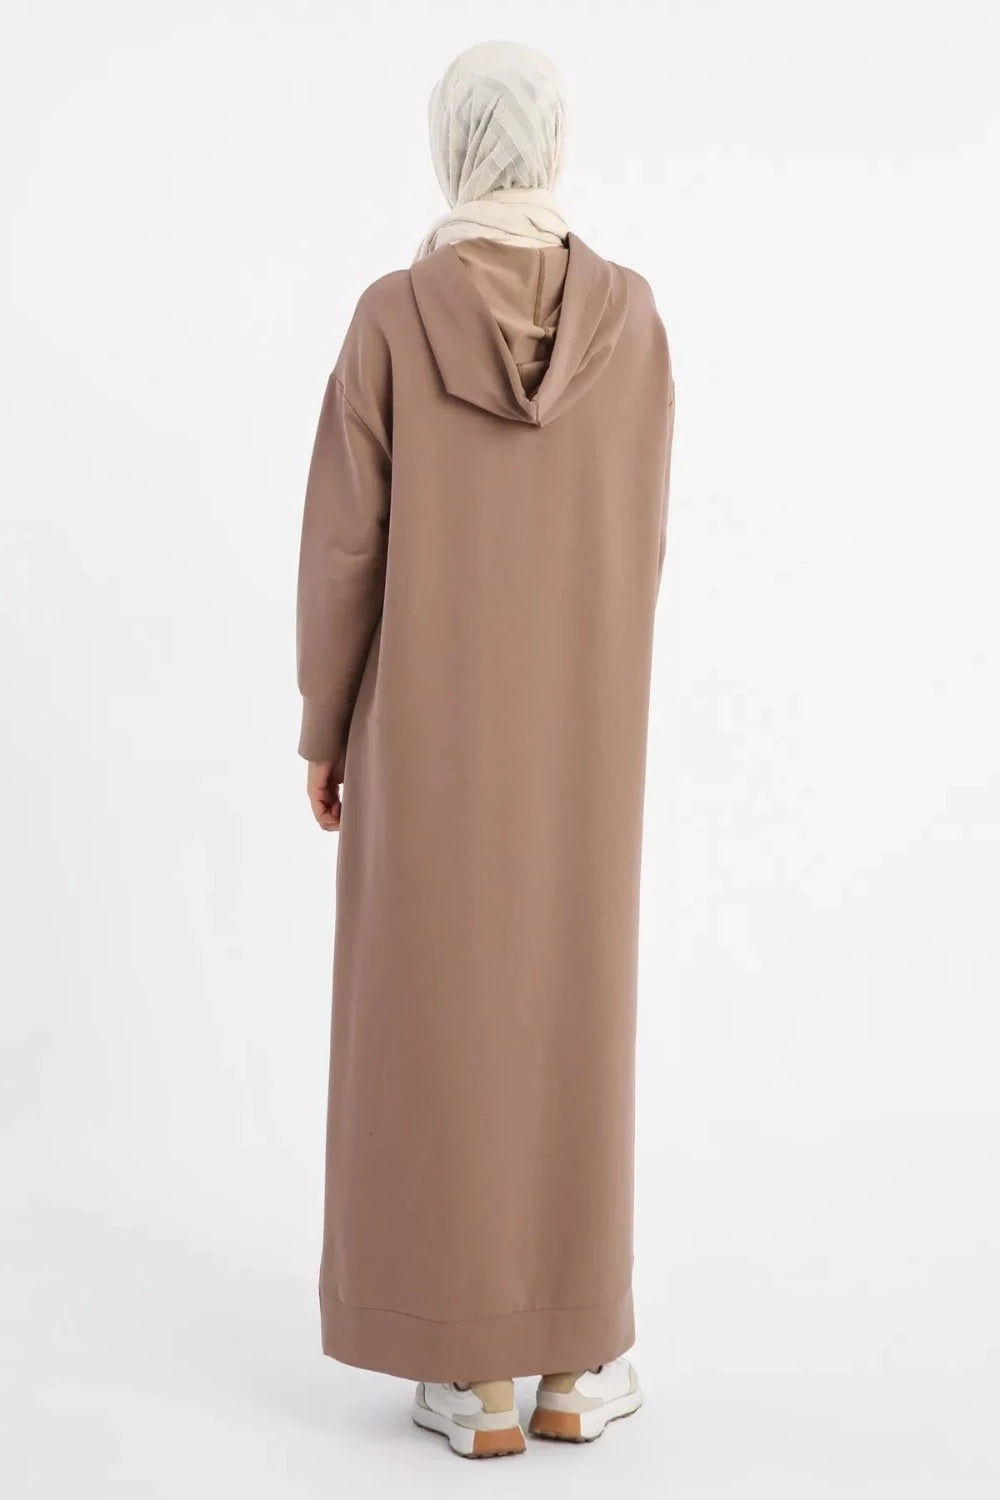 Sara Modest Hooded Chic Maxi Dress| Dana Fashion